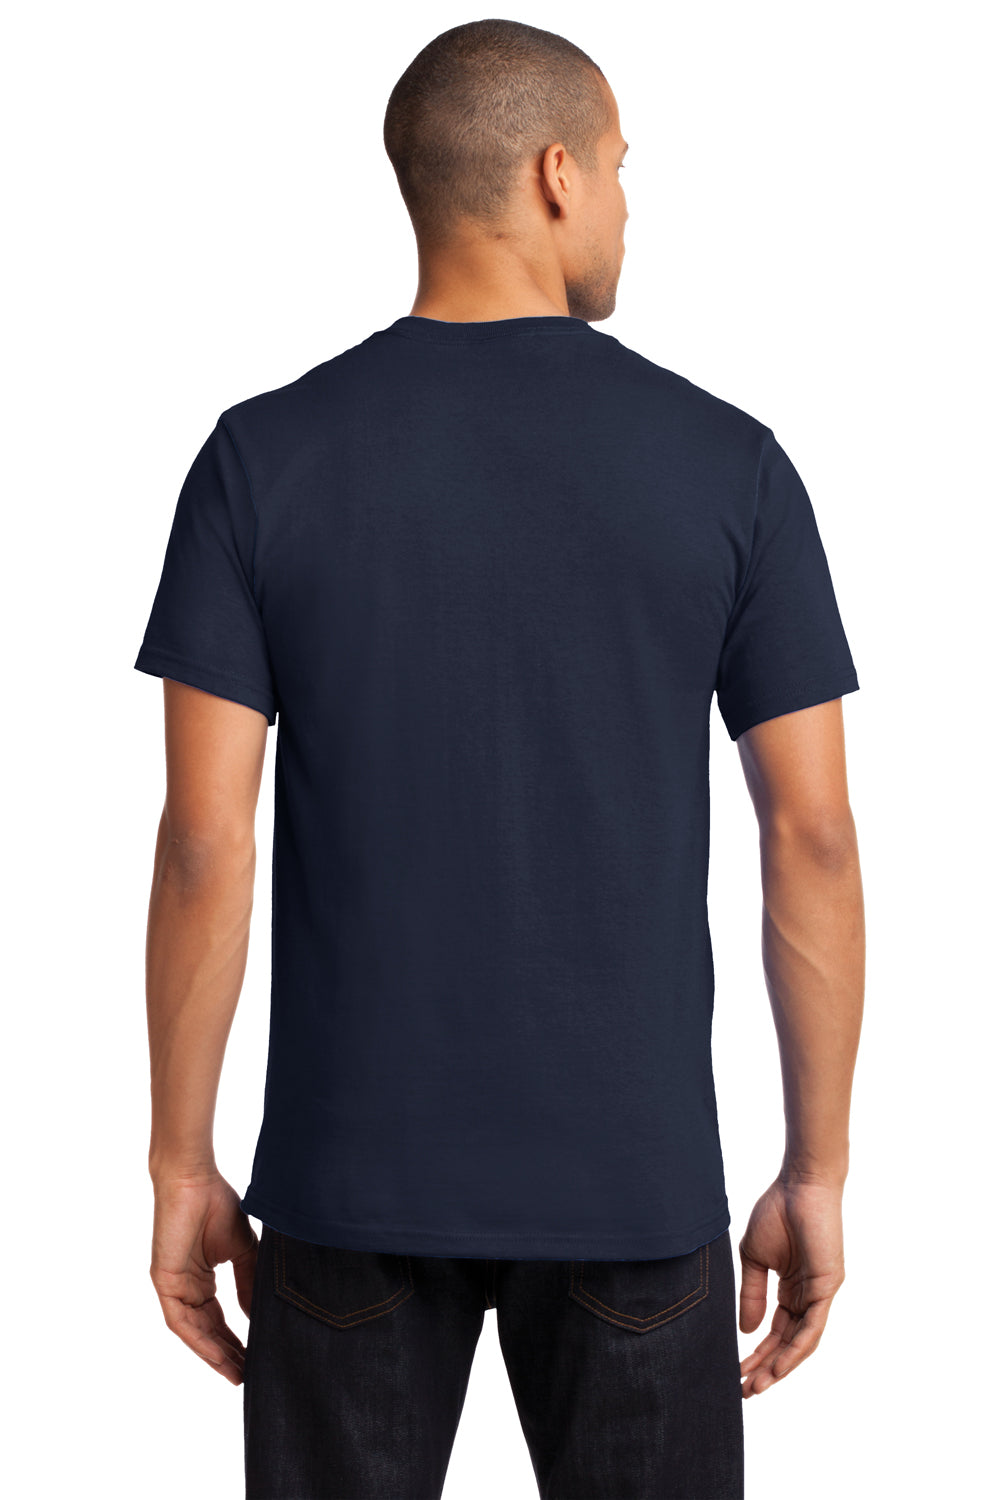 Port & Company PC61P Mens Essential Short Sleeve Crewneck T-Shirt w/ Pocket Deep Navy Blue Back